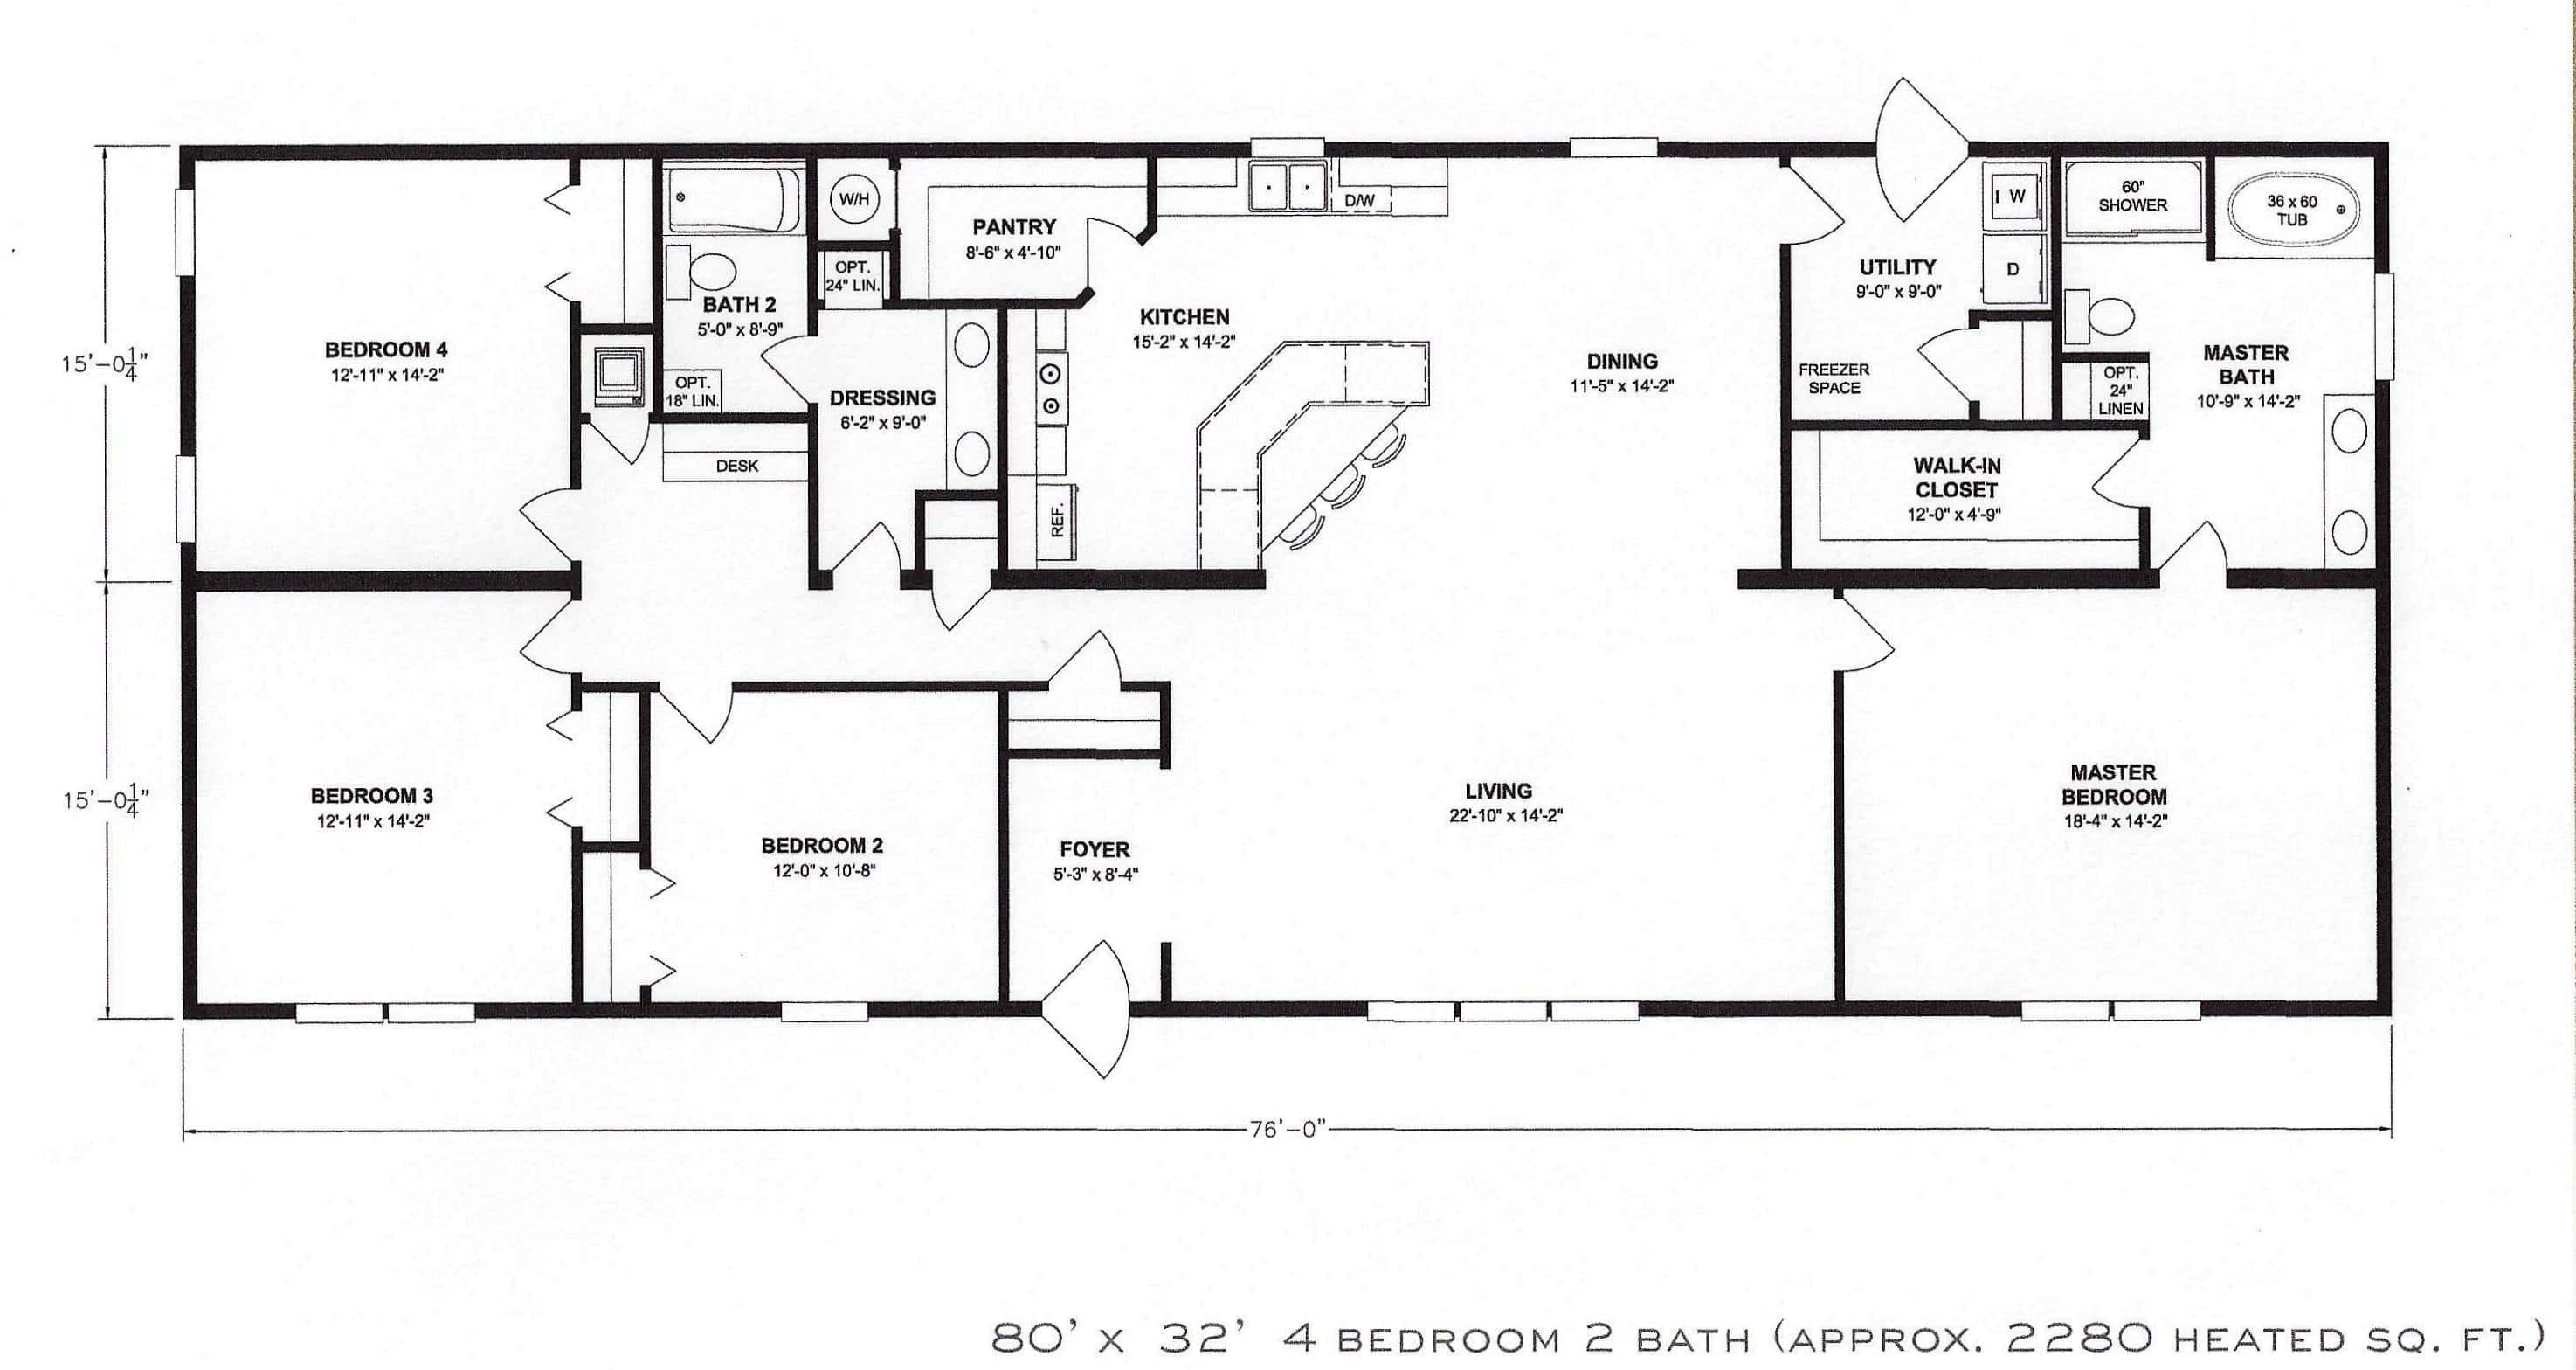 Best ideas about Bedroom Floor Plan
. Save or Pin 4 Bedroom Floor Plan F 1001 Hawks Homes Now.